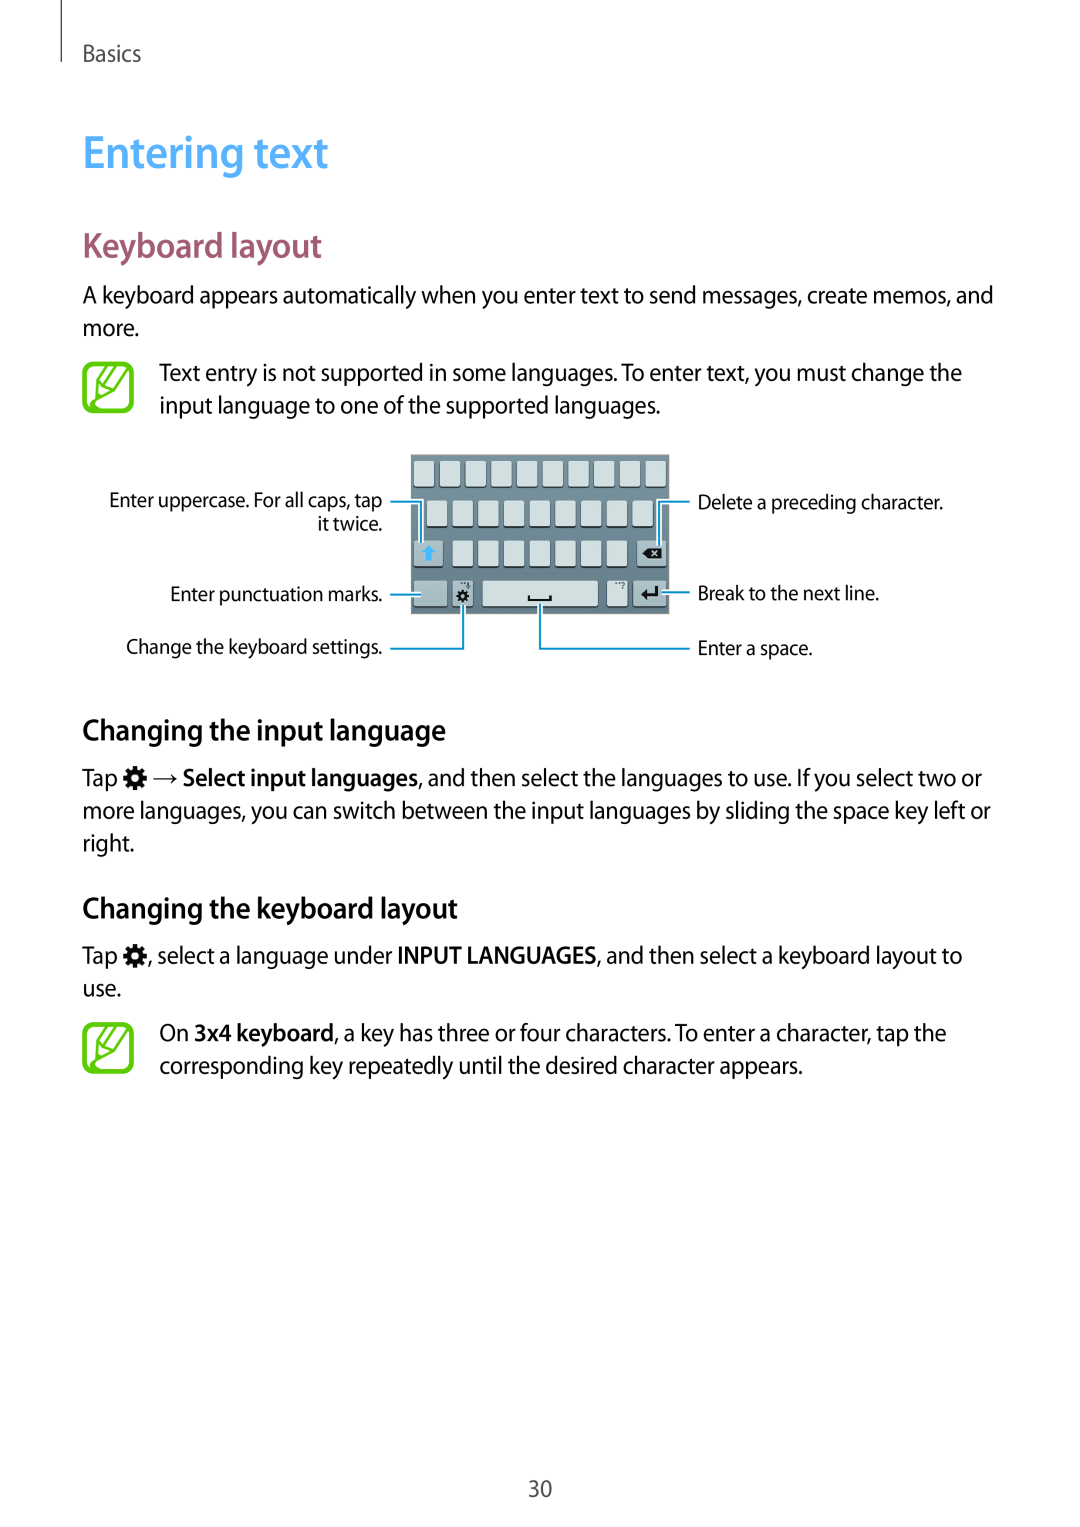 Samsung SM-A300FZKUTPH Entering text, Keyboard layout, Changing the input language, Changing the keyboard layout, Basics 